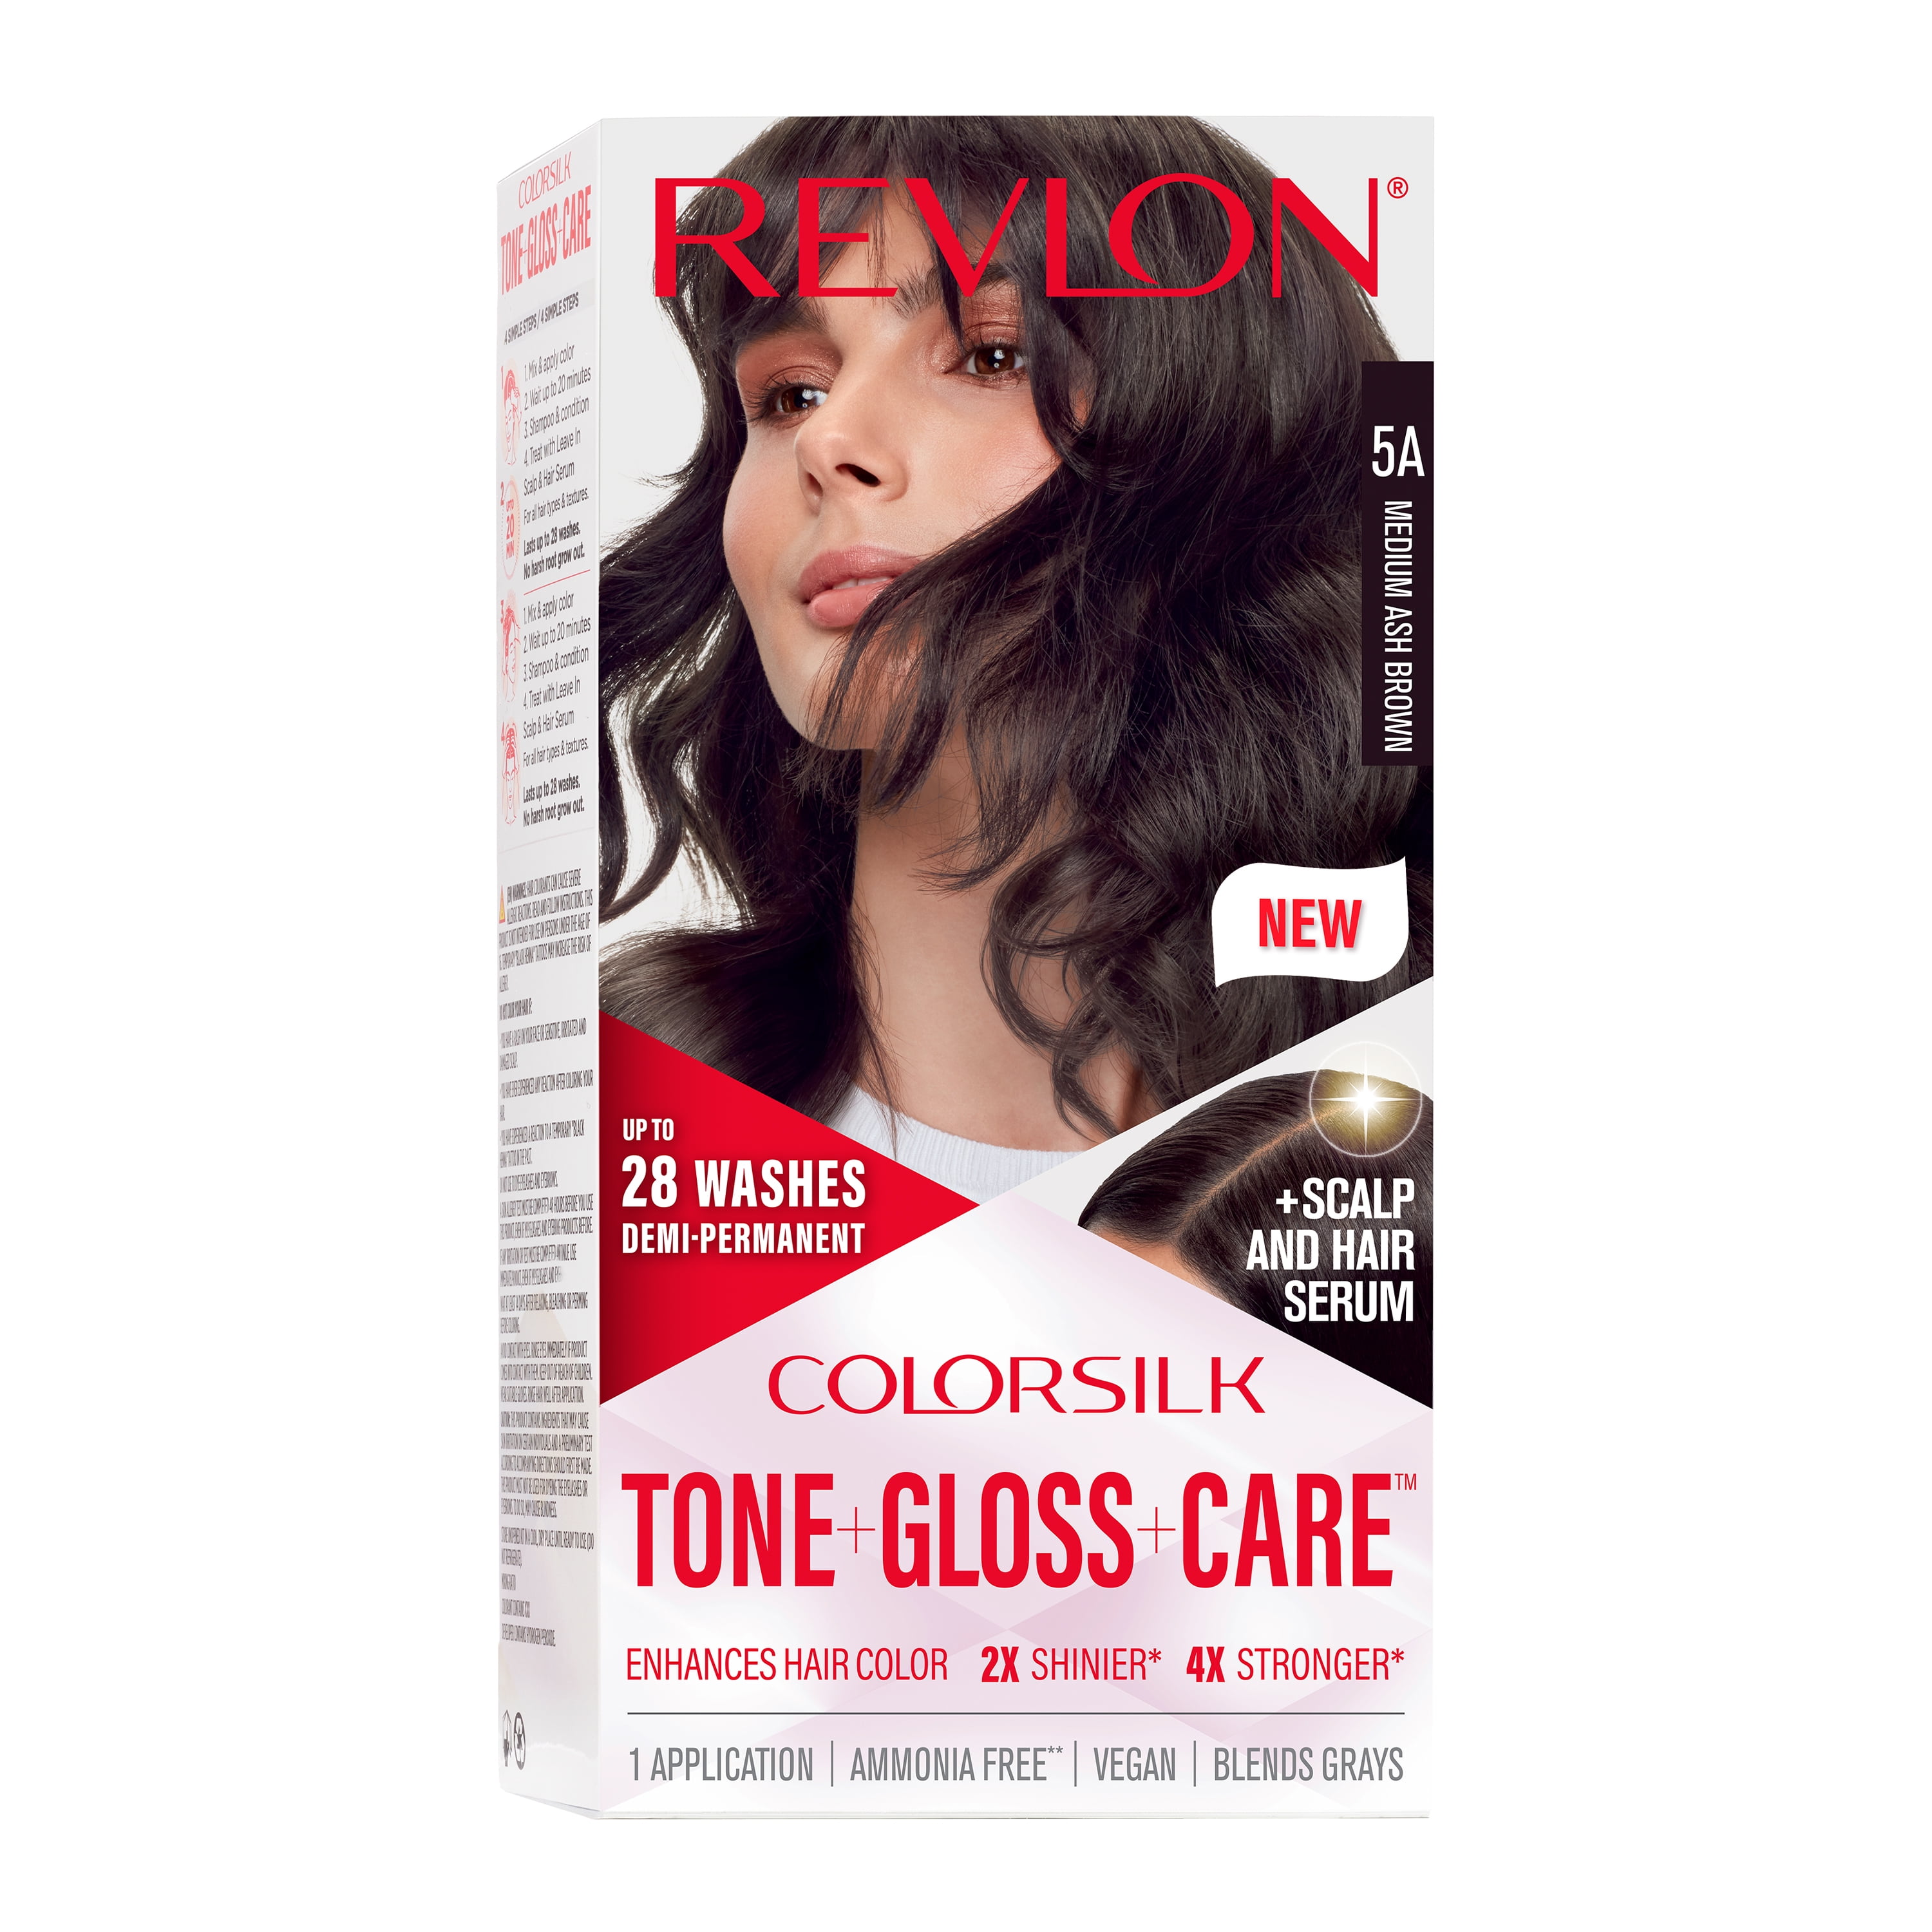 Revlon ColorSilk Tone + Gloss Demi-Permanent Hair oz 5A + Care Ash fl. Medium Color, Brown, 4.5